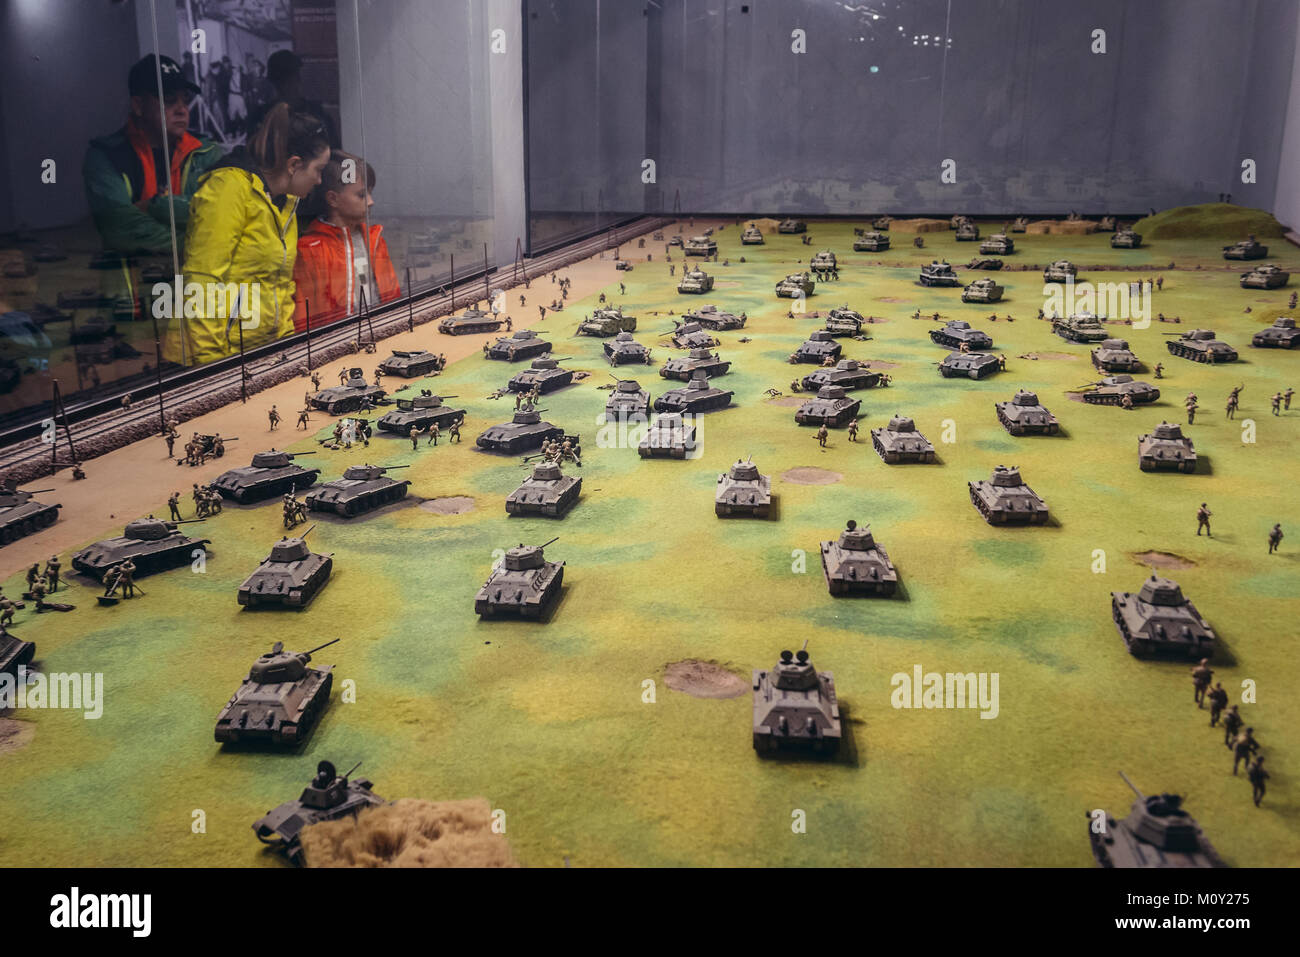 Model of Battle of Kursk - the largest World War II tank battle in museum of Mamerki bunker complex in Masuria region of Poland Stock Photo